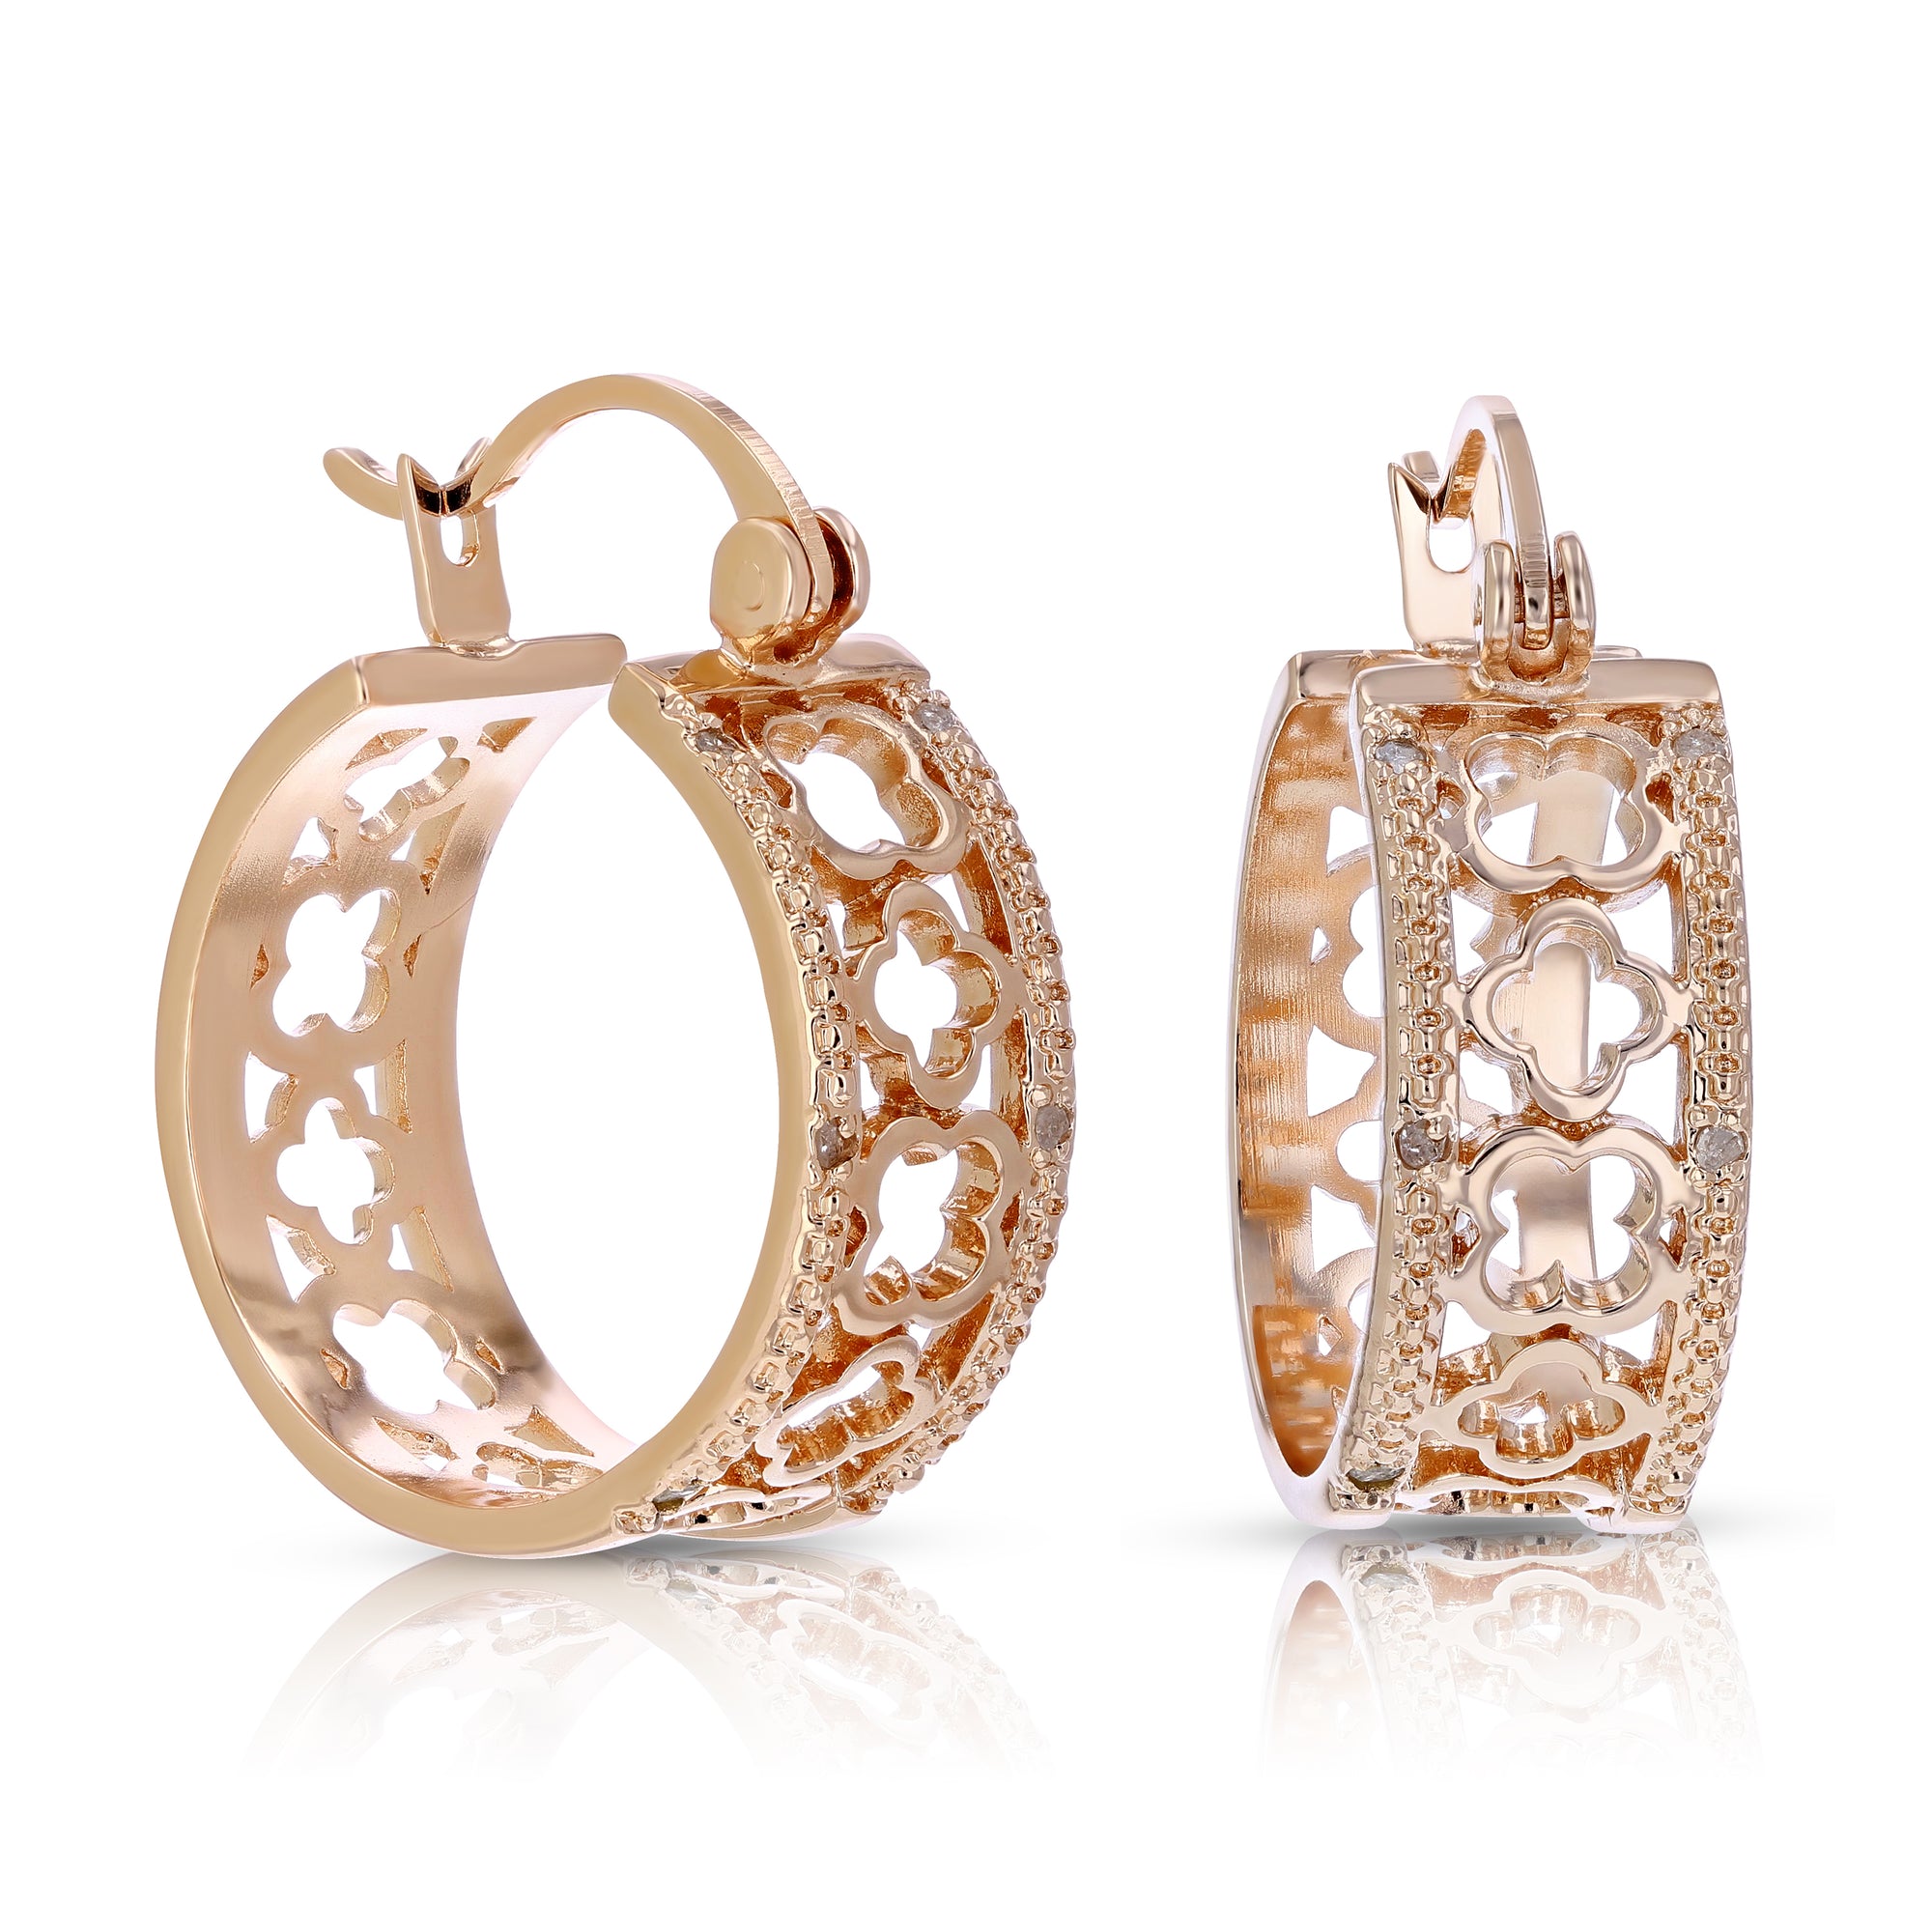 1/20 cttw Diamond Hoop Earrings Pink Gold Plated over Brass Clover 1/2 Inch